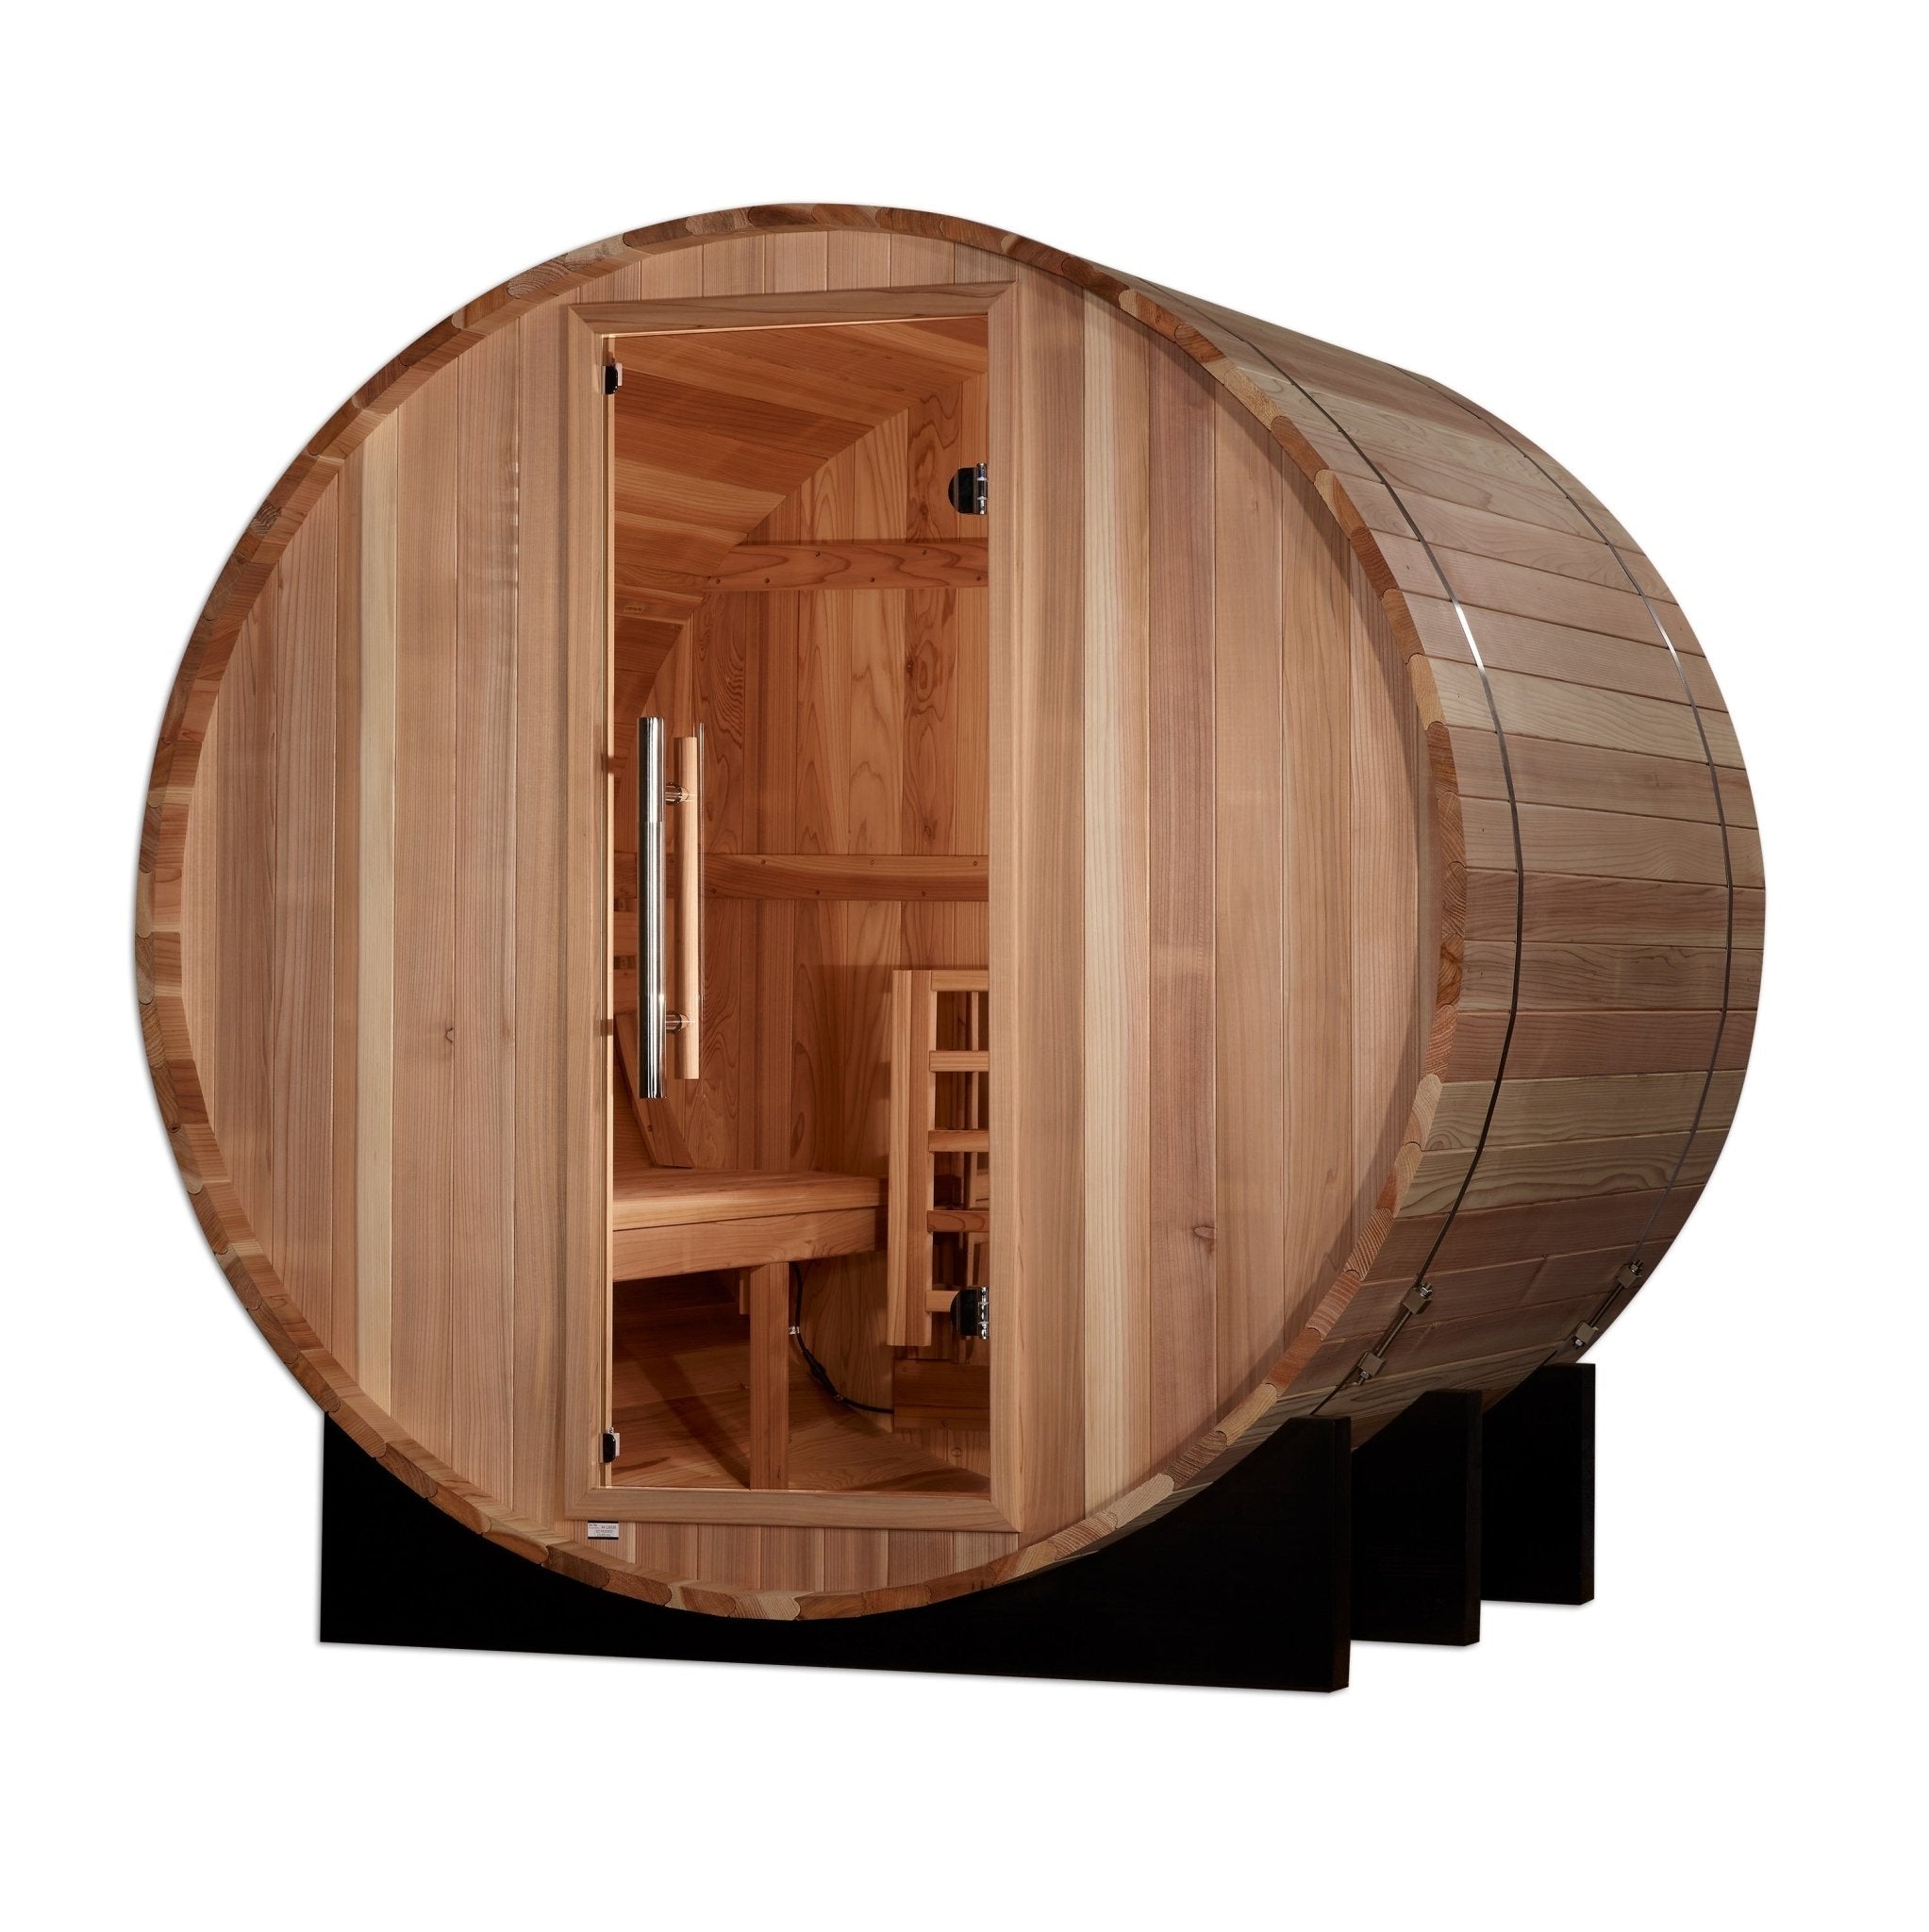 Golden Designs "St. Moritz" 2 Person Barrel Traditional Sauna - Pacific Cedar - The Sauna World